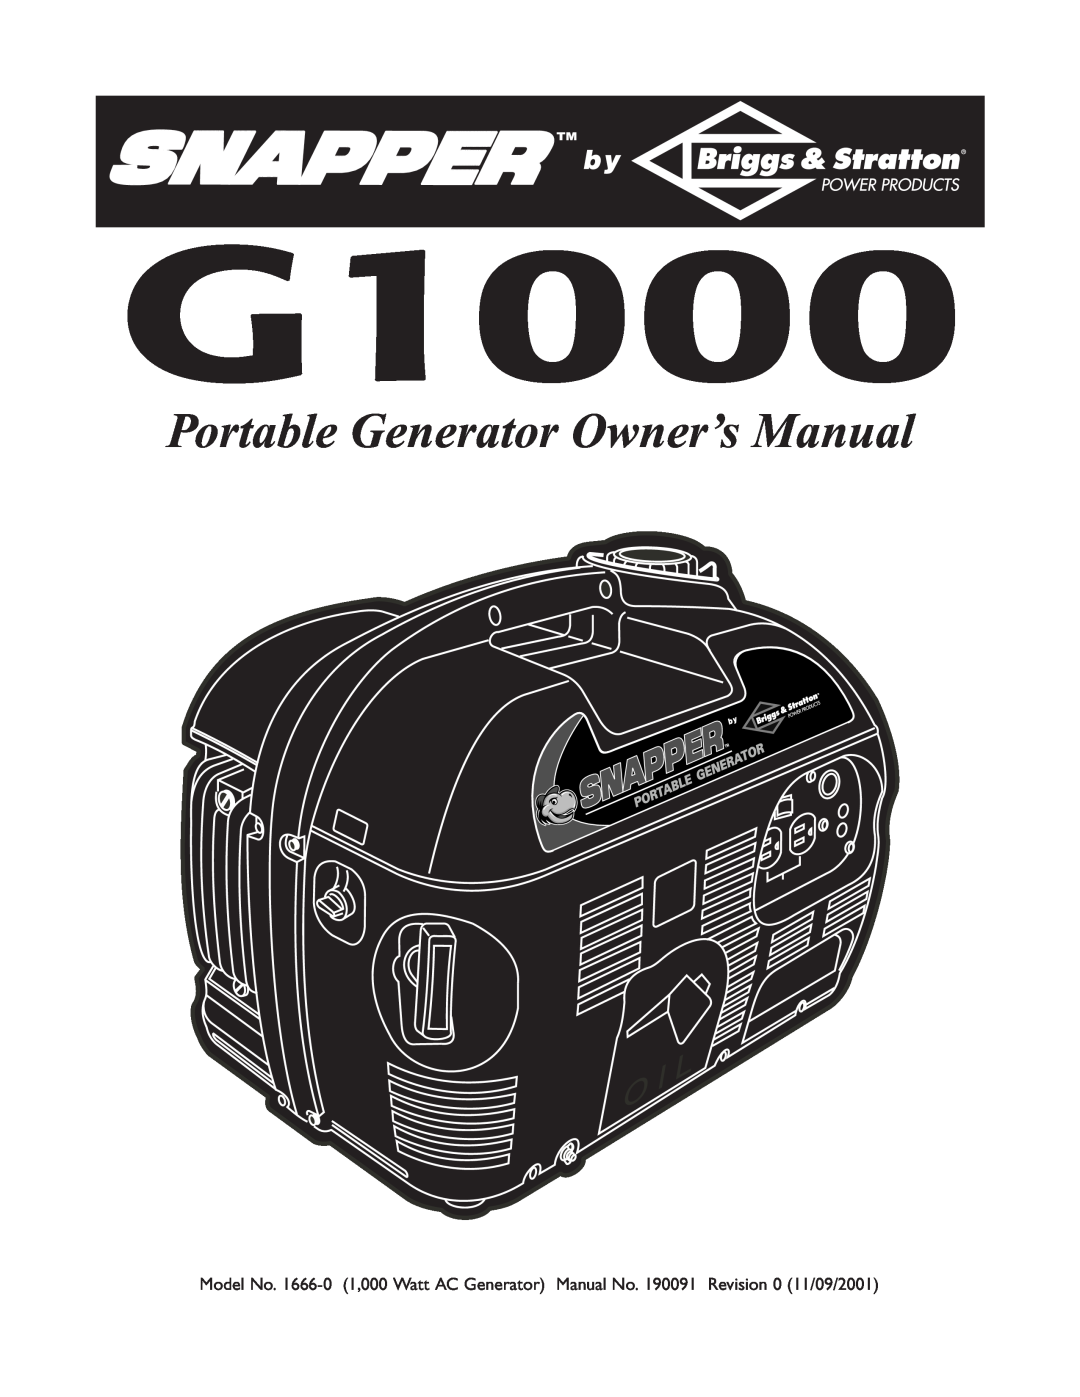 Snapper 1666-0 owner manual G1000, Portable Generator Owner’s Manual 